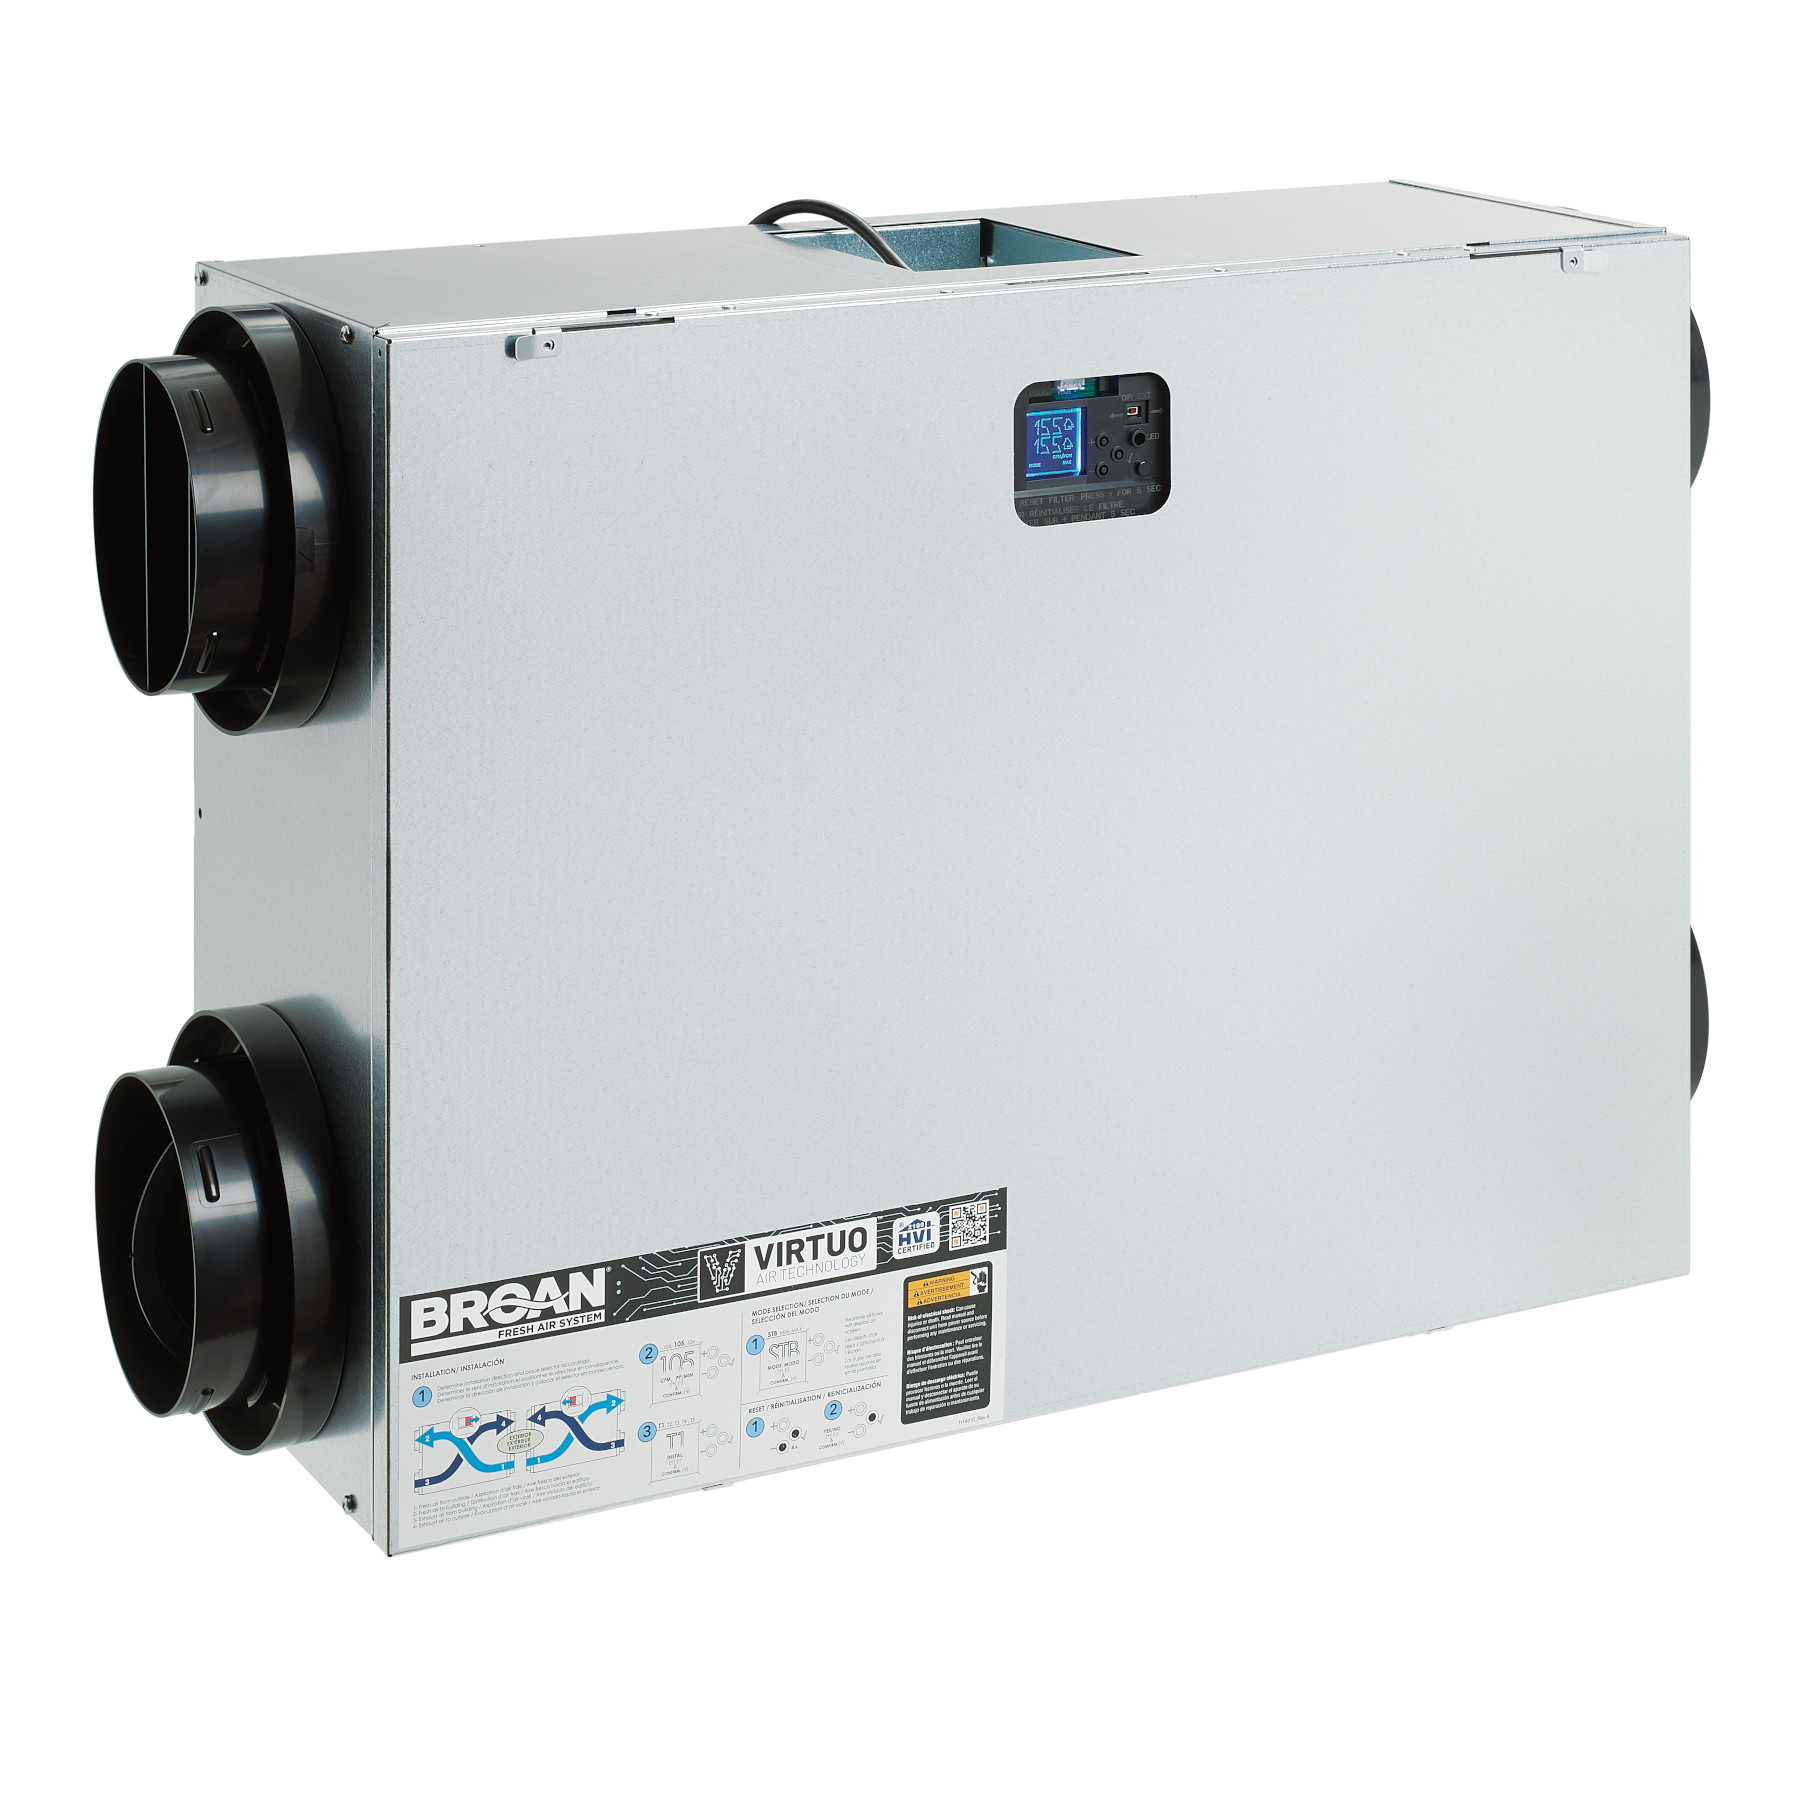 Broan® ONE Energy Recovery Ventilator (ERV), Power Cord